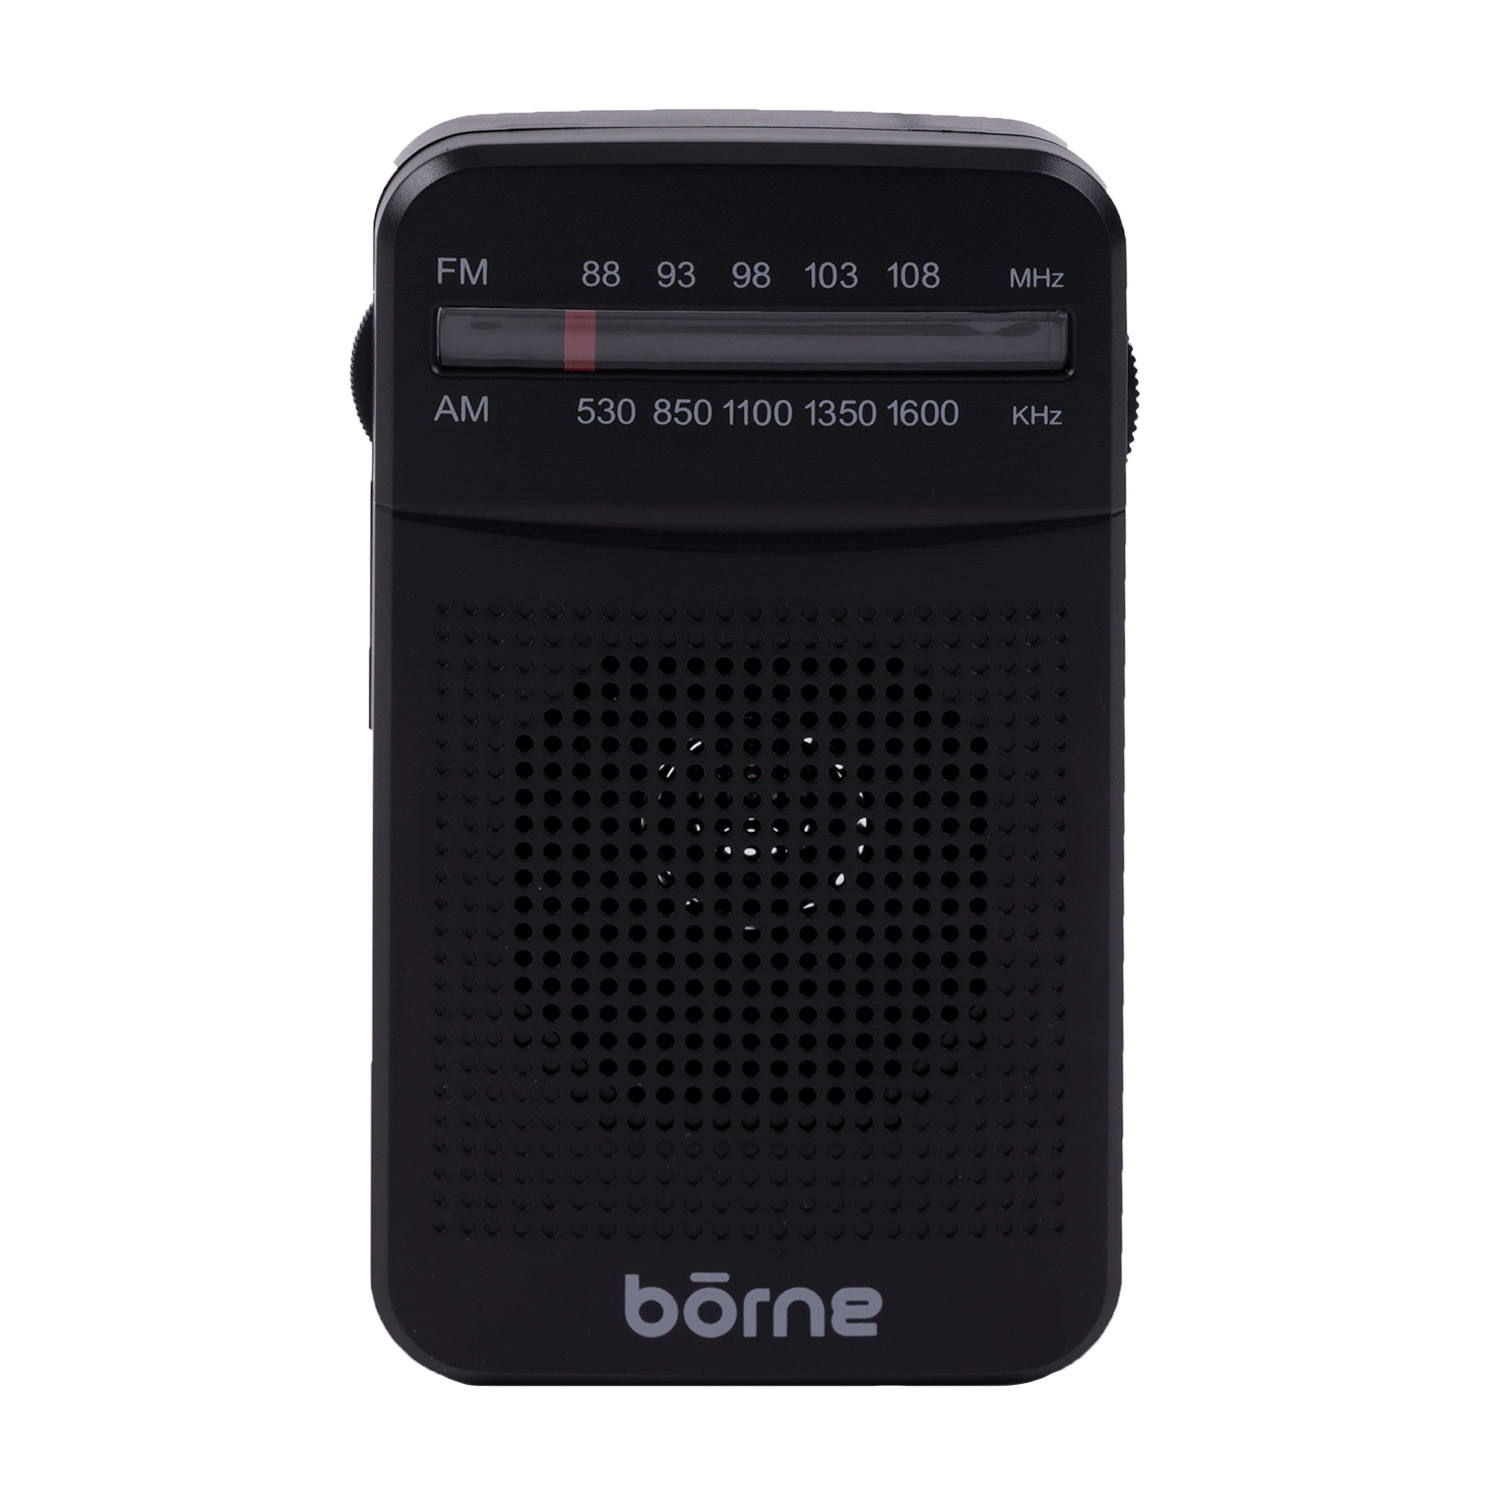 Borne - Pocket radio